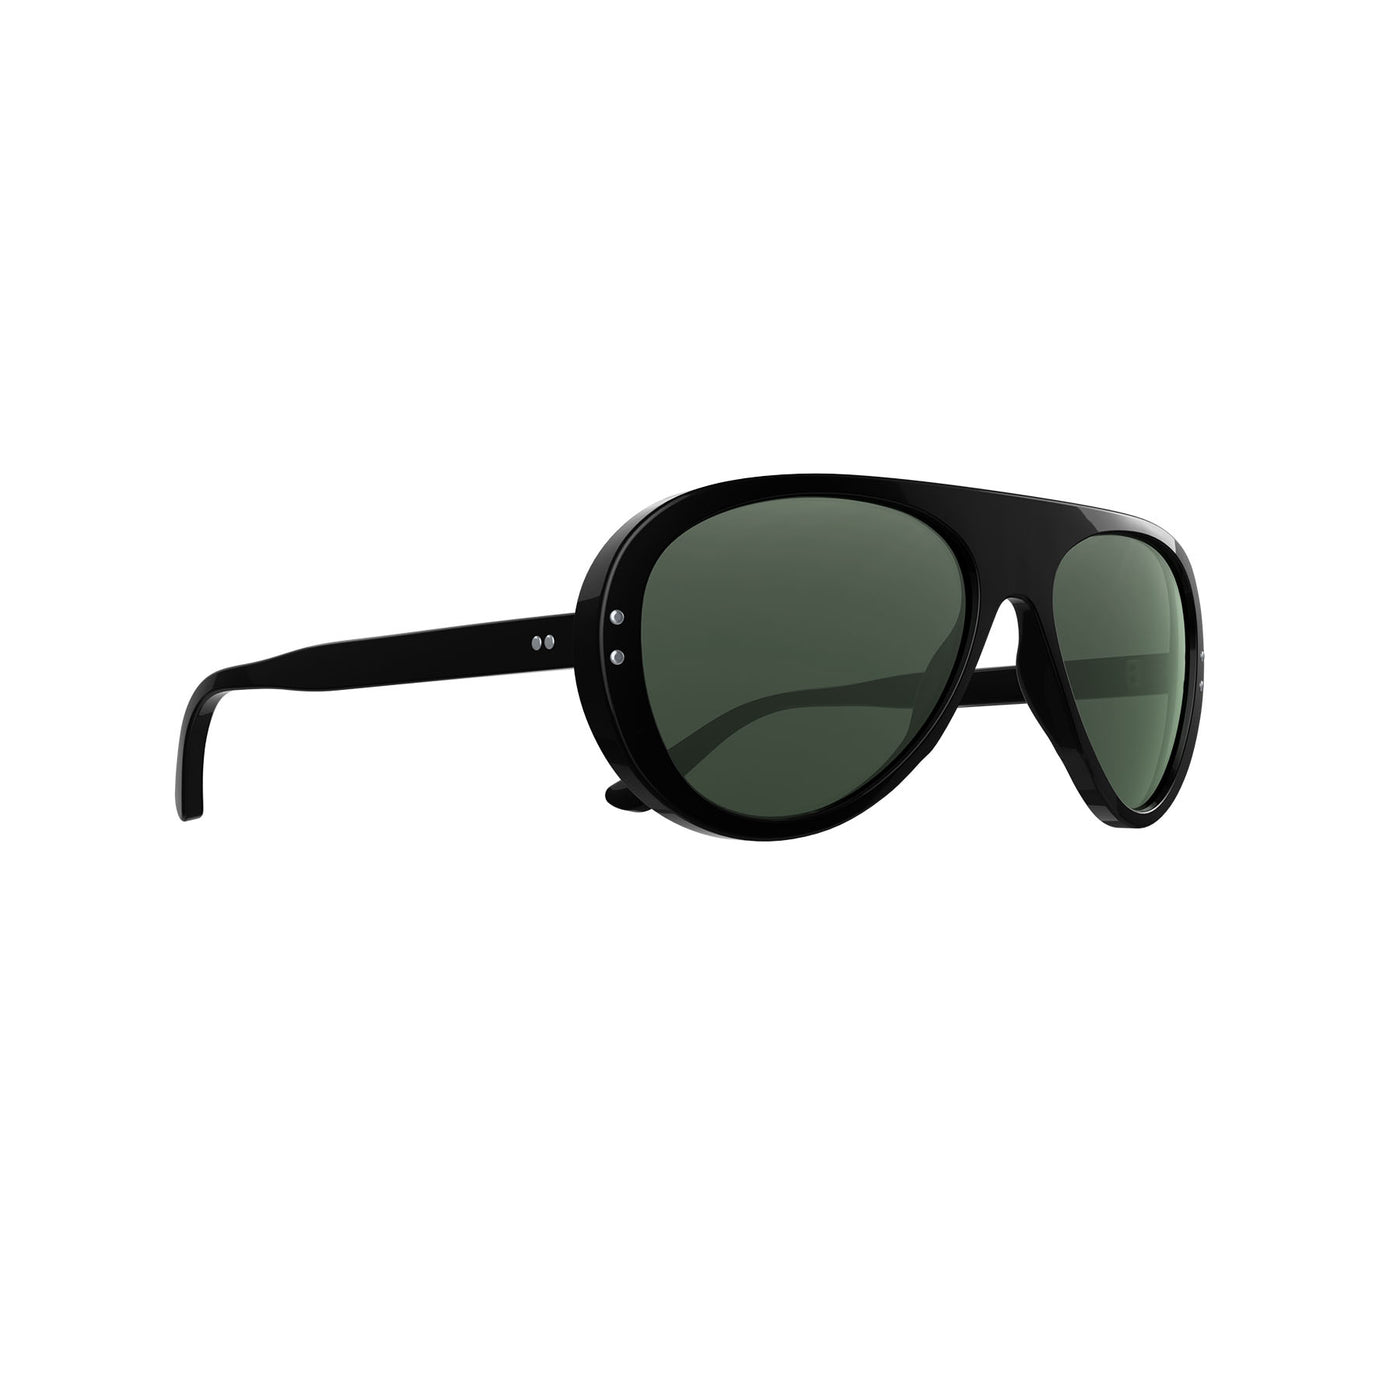 Vallon glasses Moto Aviator Black/Green